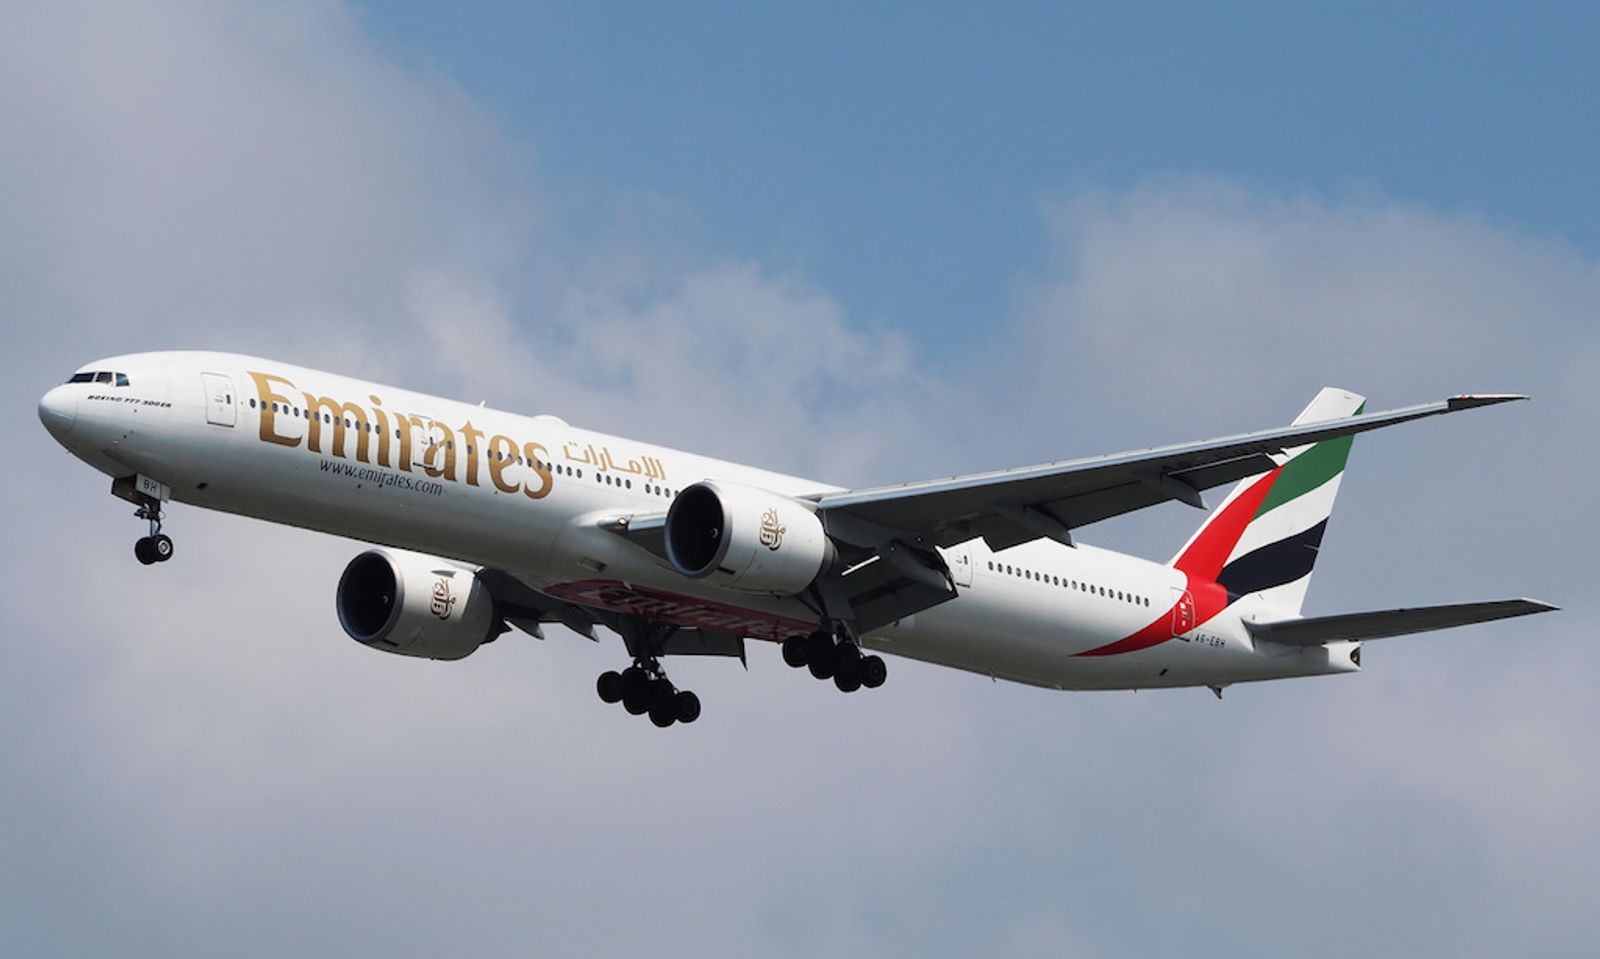 Emirates Air In-Flight Movies Censor Same-Sex Kiss Scenes: Report